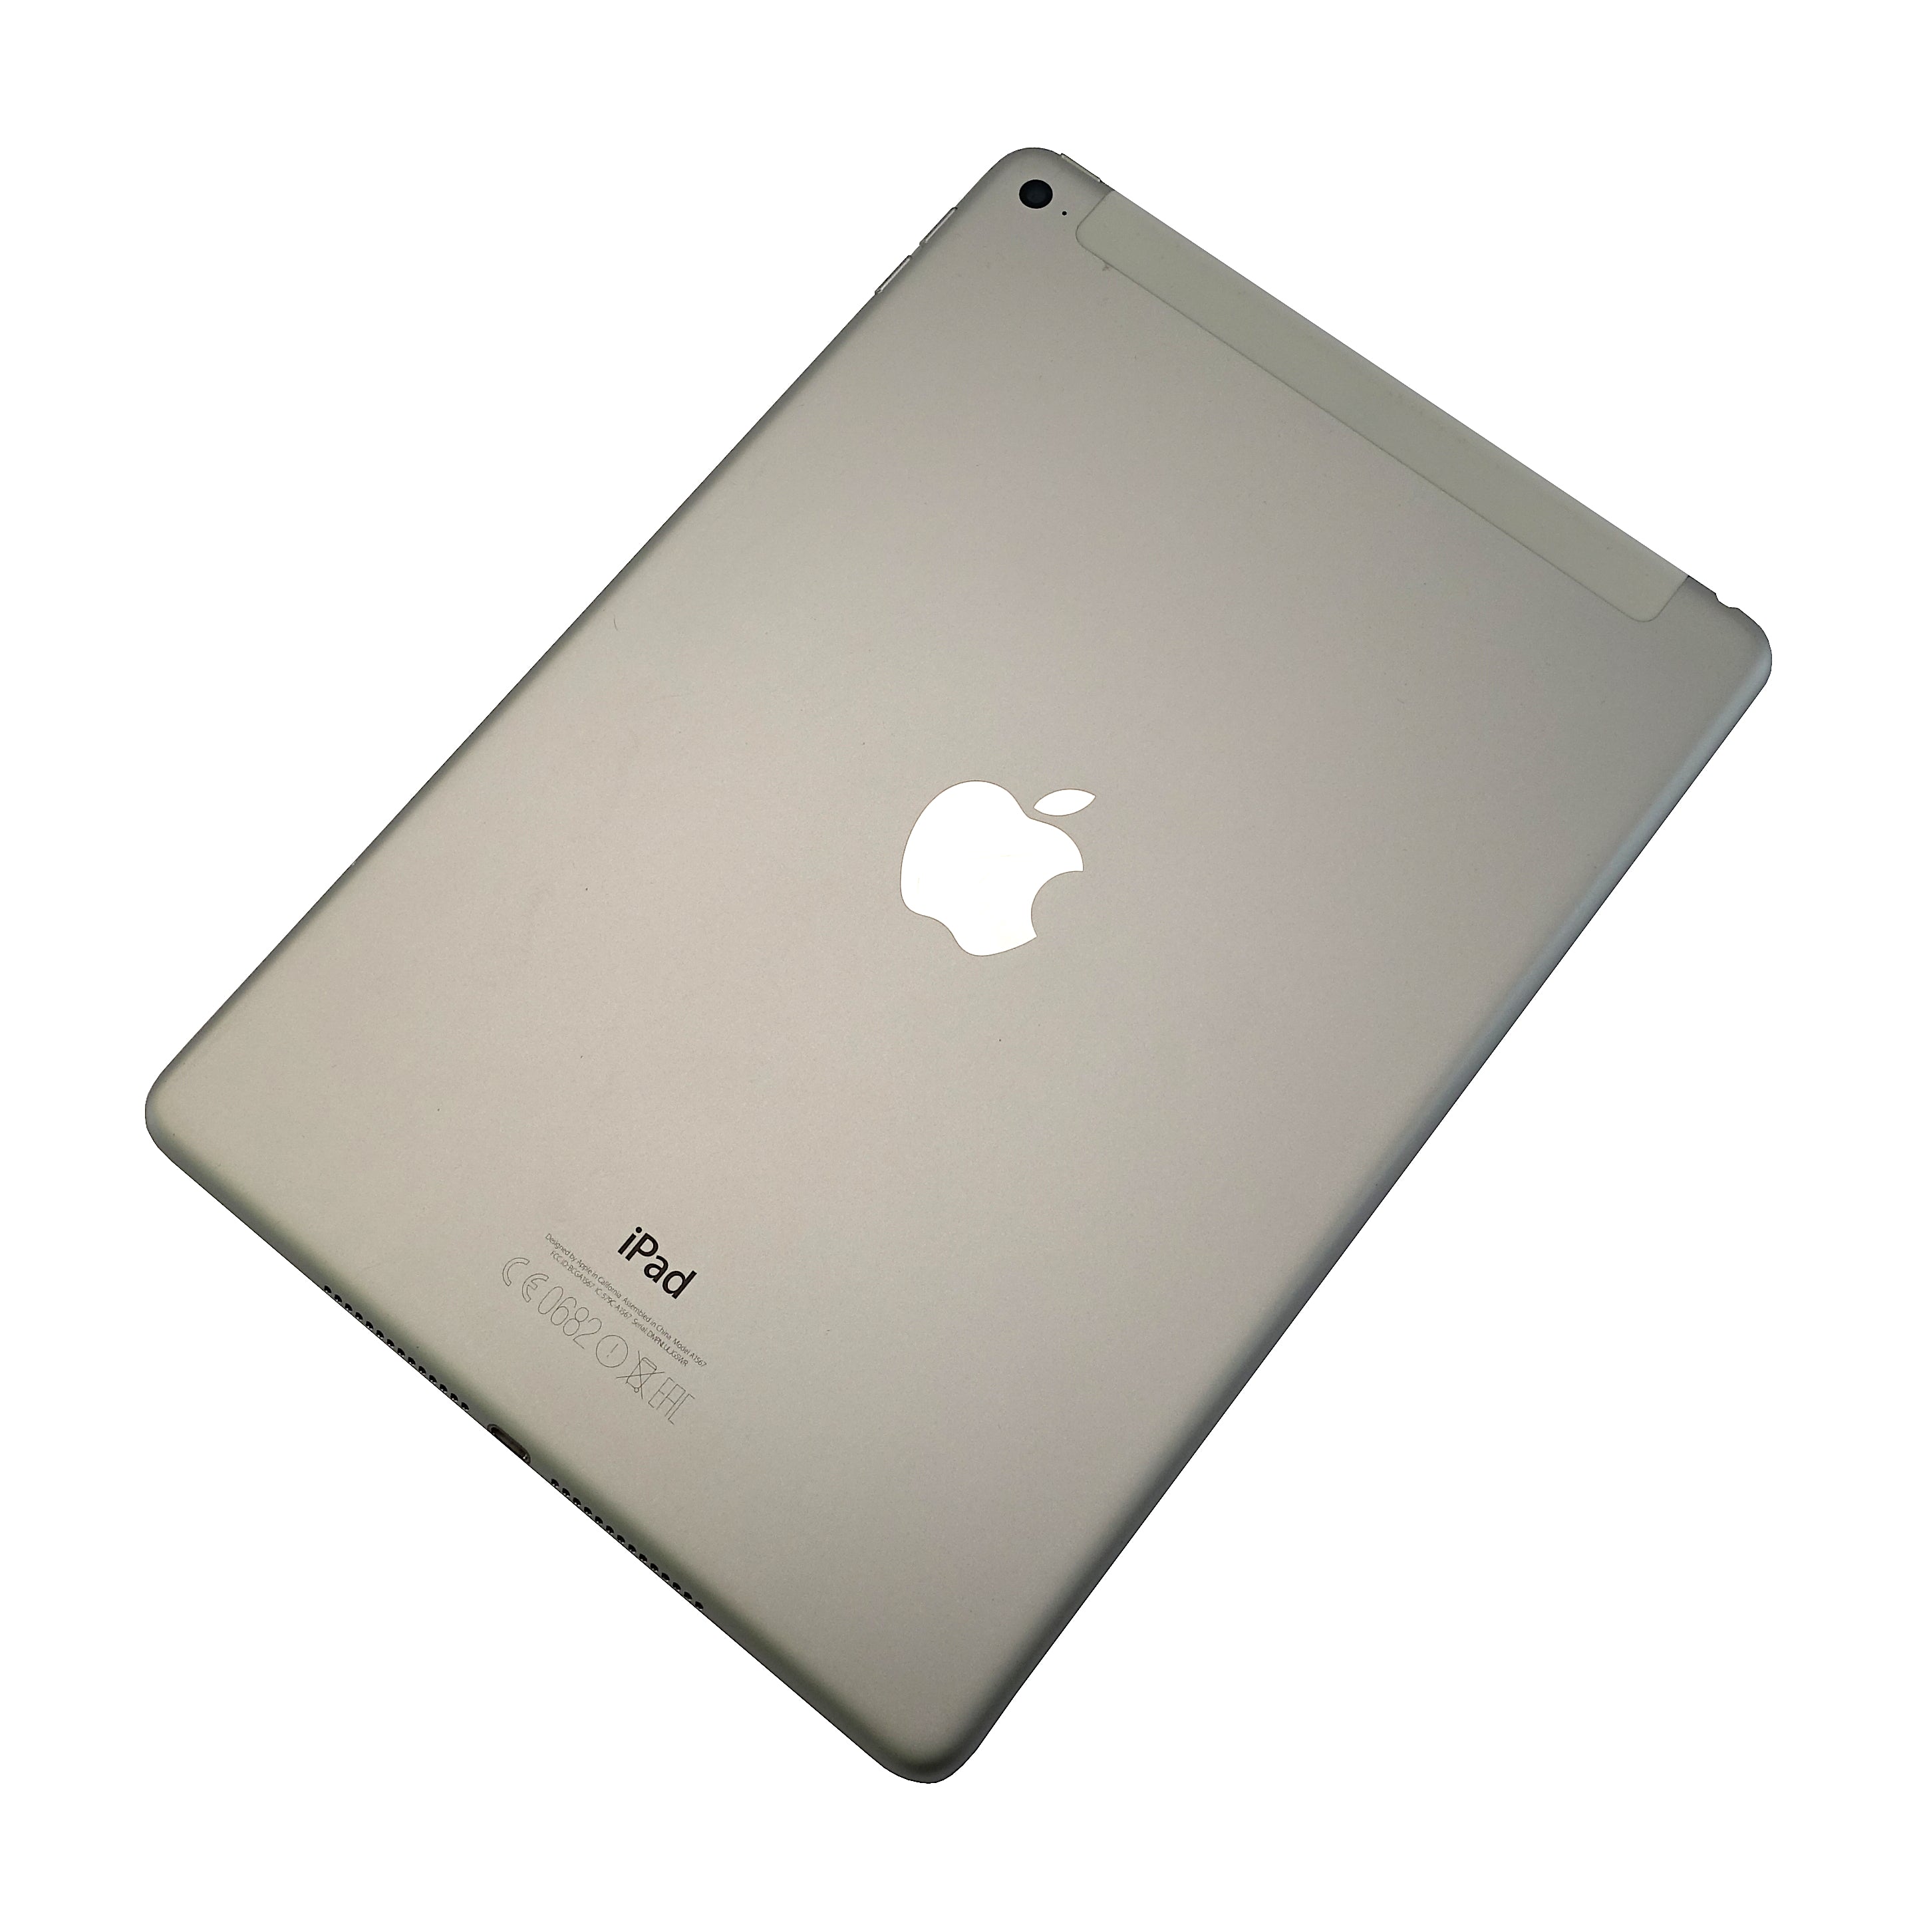 Apple iPad Air 2 Tablet, 32GB, WiFi + GSM, Silver, A1567